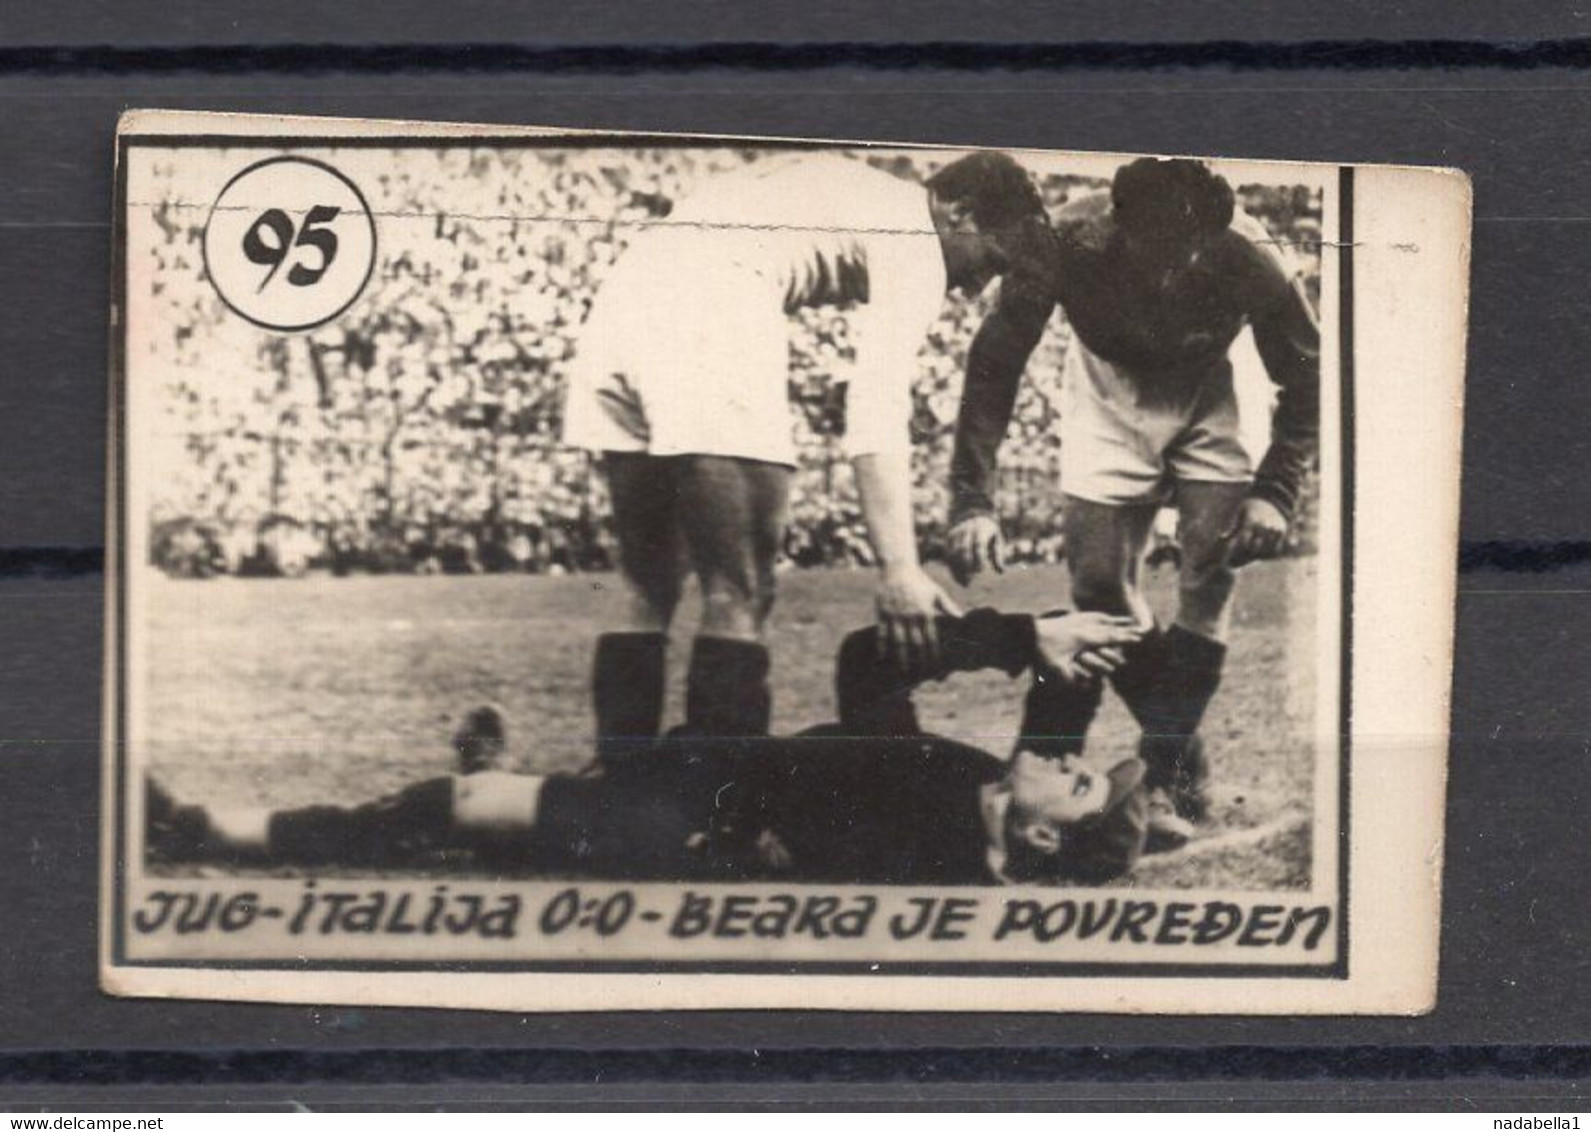 1951. YUGOSLAVIA - ITALY 0:0,BEARA IS INJURED,VINTAGE FOOTBALL TRADING CARDS,6 X 4 Cm - 1950-1959